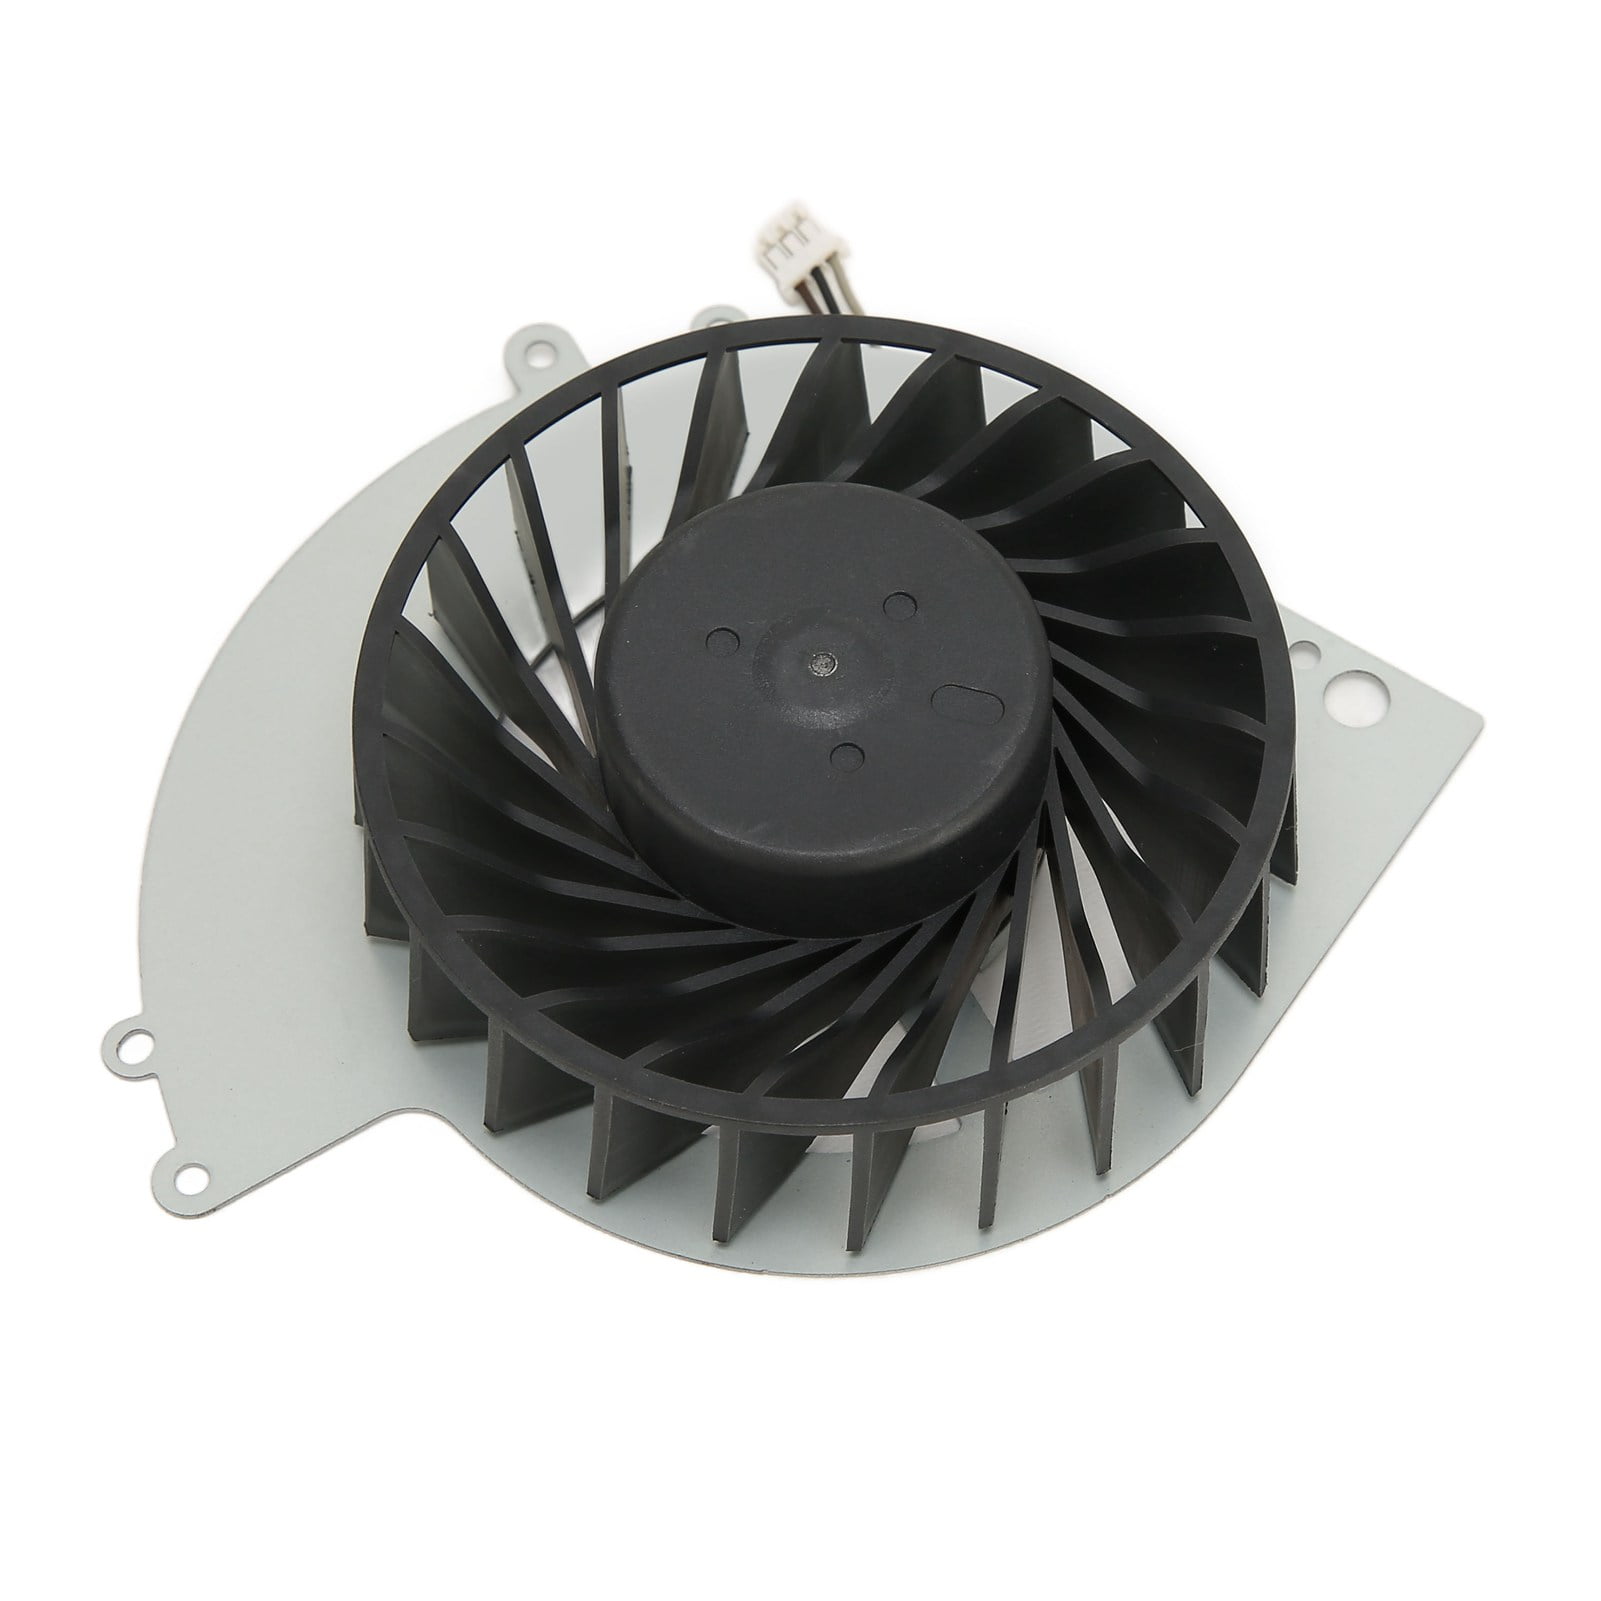 CPU Cooling Fan,Internal Cooler Replacement For CUH 1200 CUH 12XX